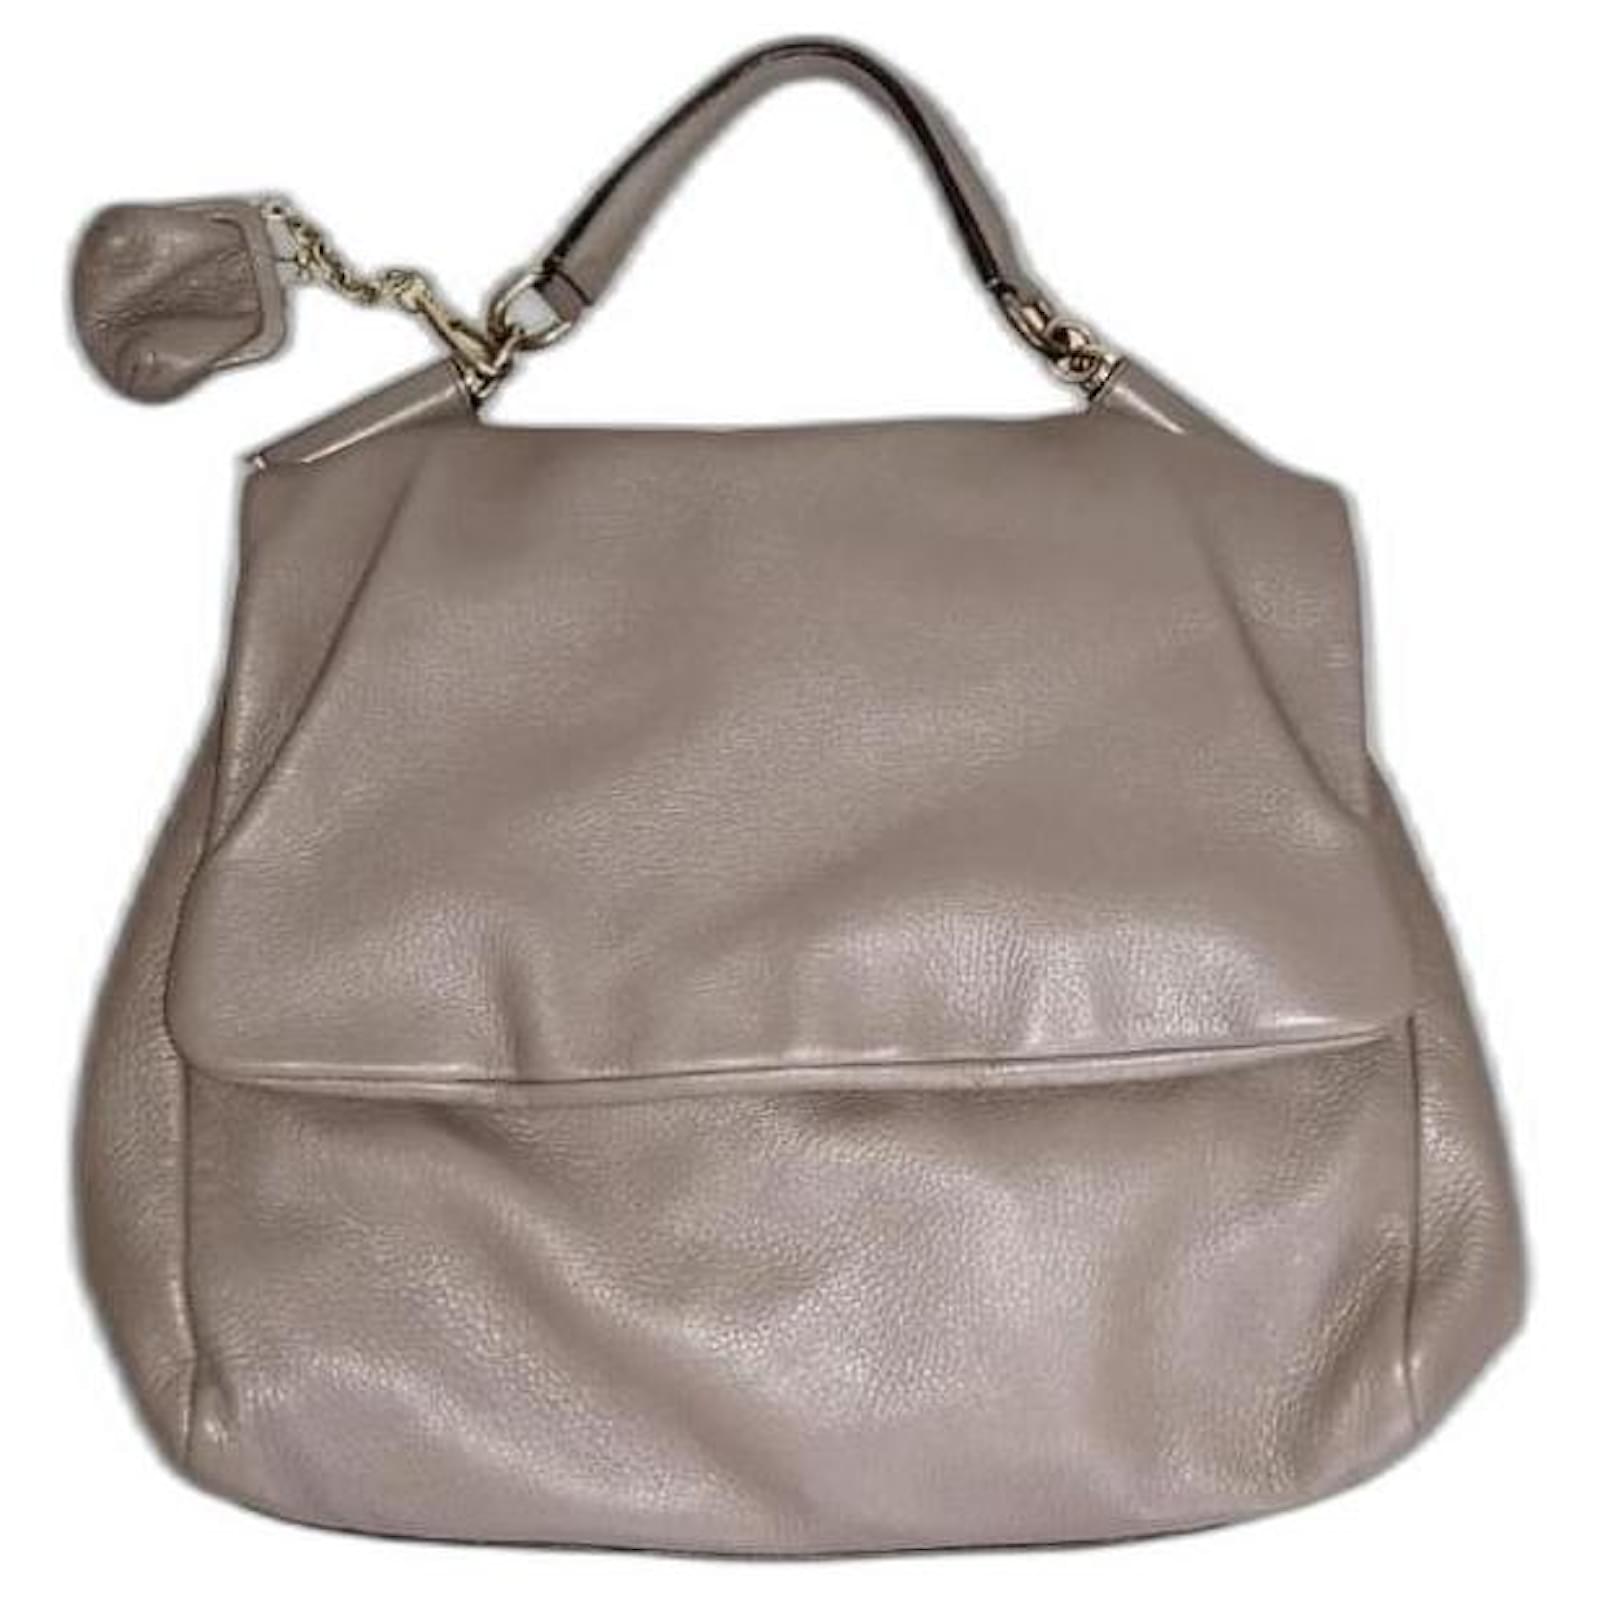 Luxury Bag dolce gabbana purse | eBay